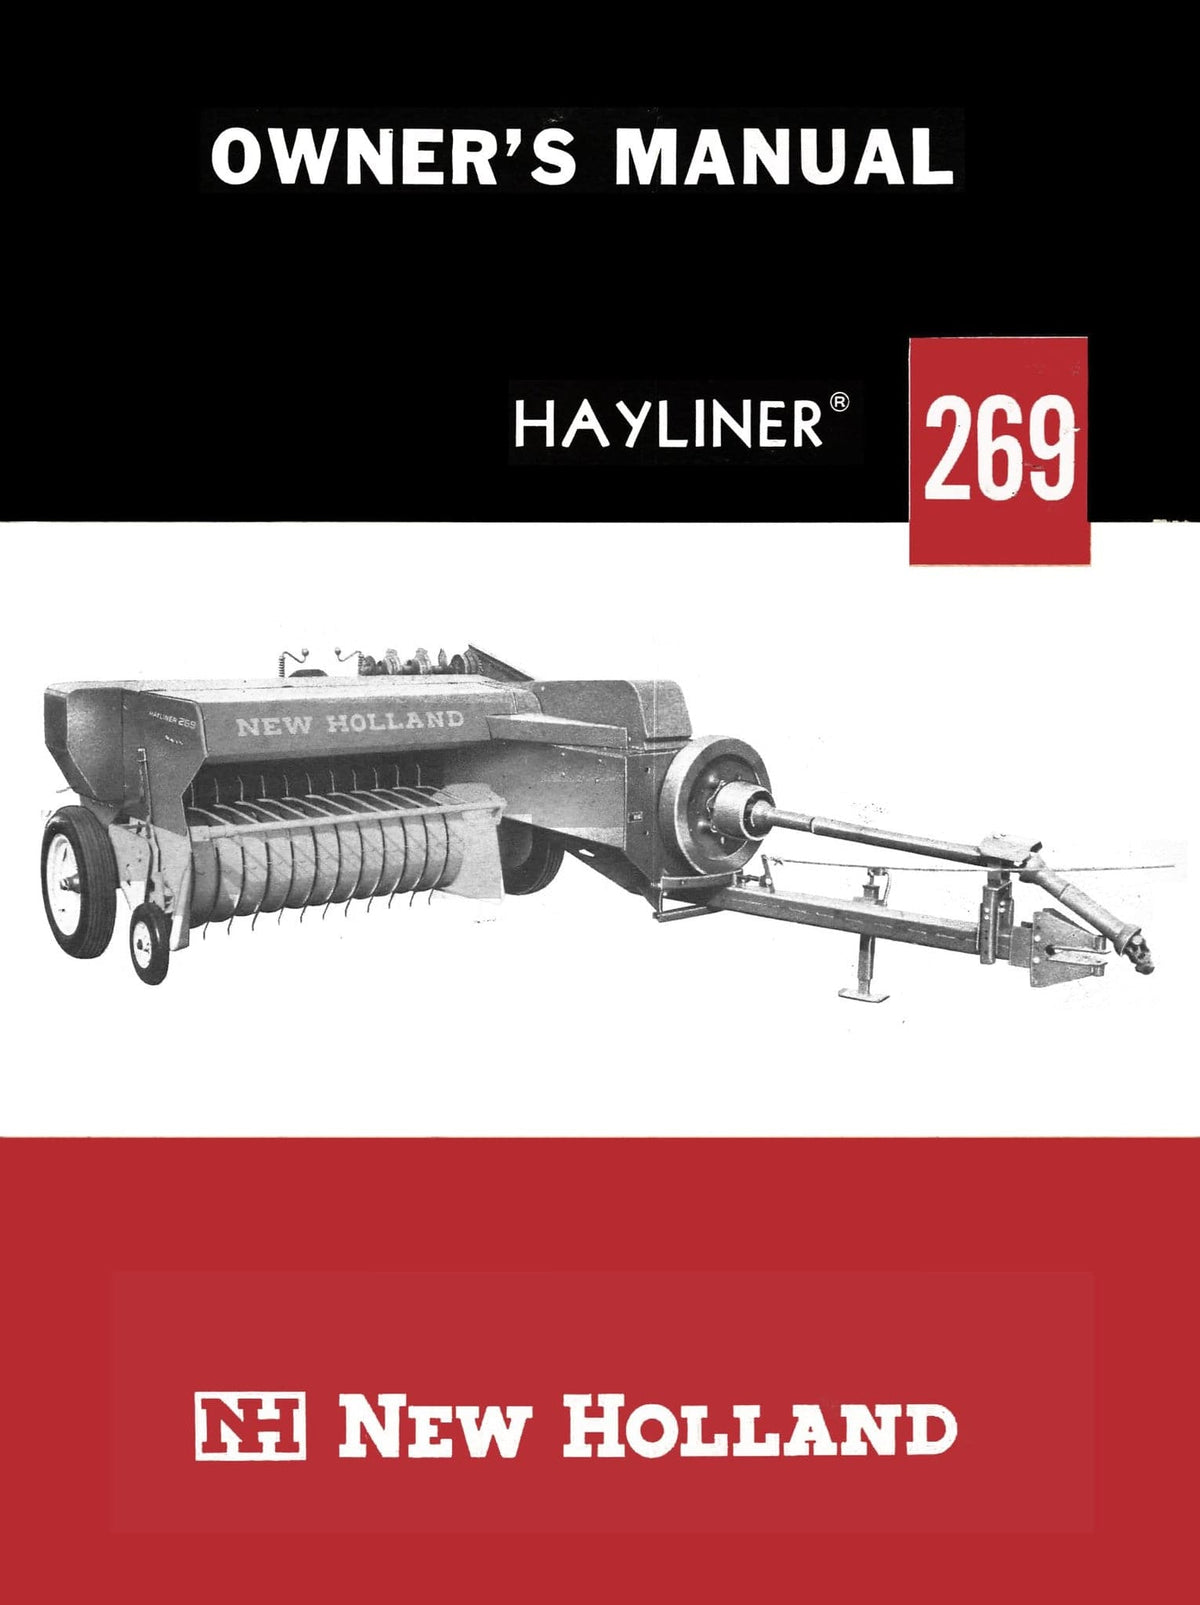 New Holland Hayliner 269 Baler - Owner's Manual - Ag Manuals - A Provider of Digital Farm Manuals - 1